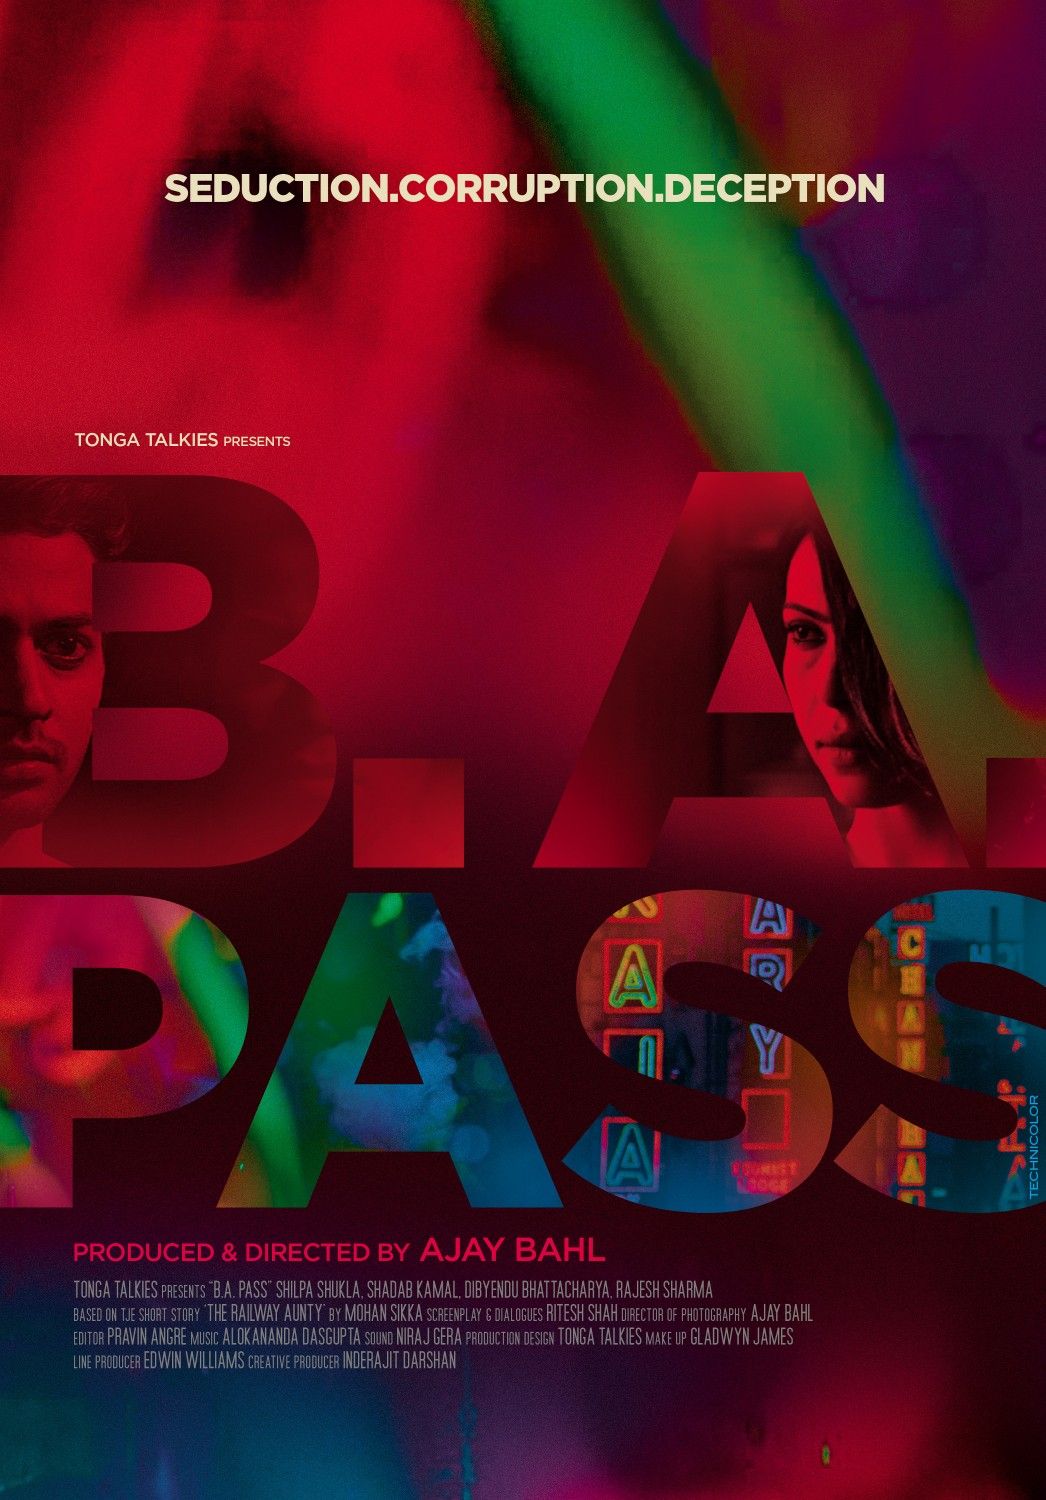 B.A. Pass telugu movie tamil dubbed